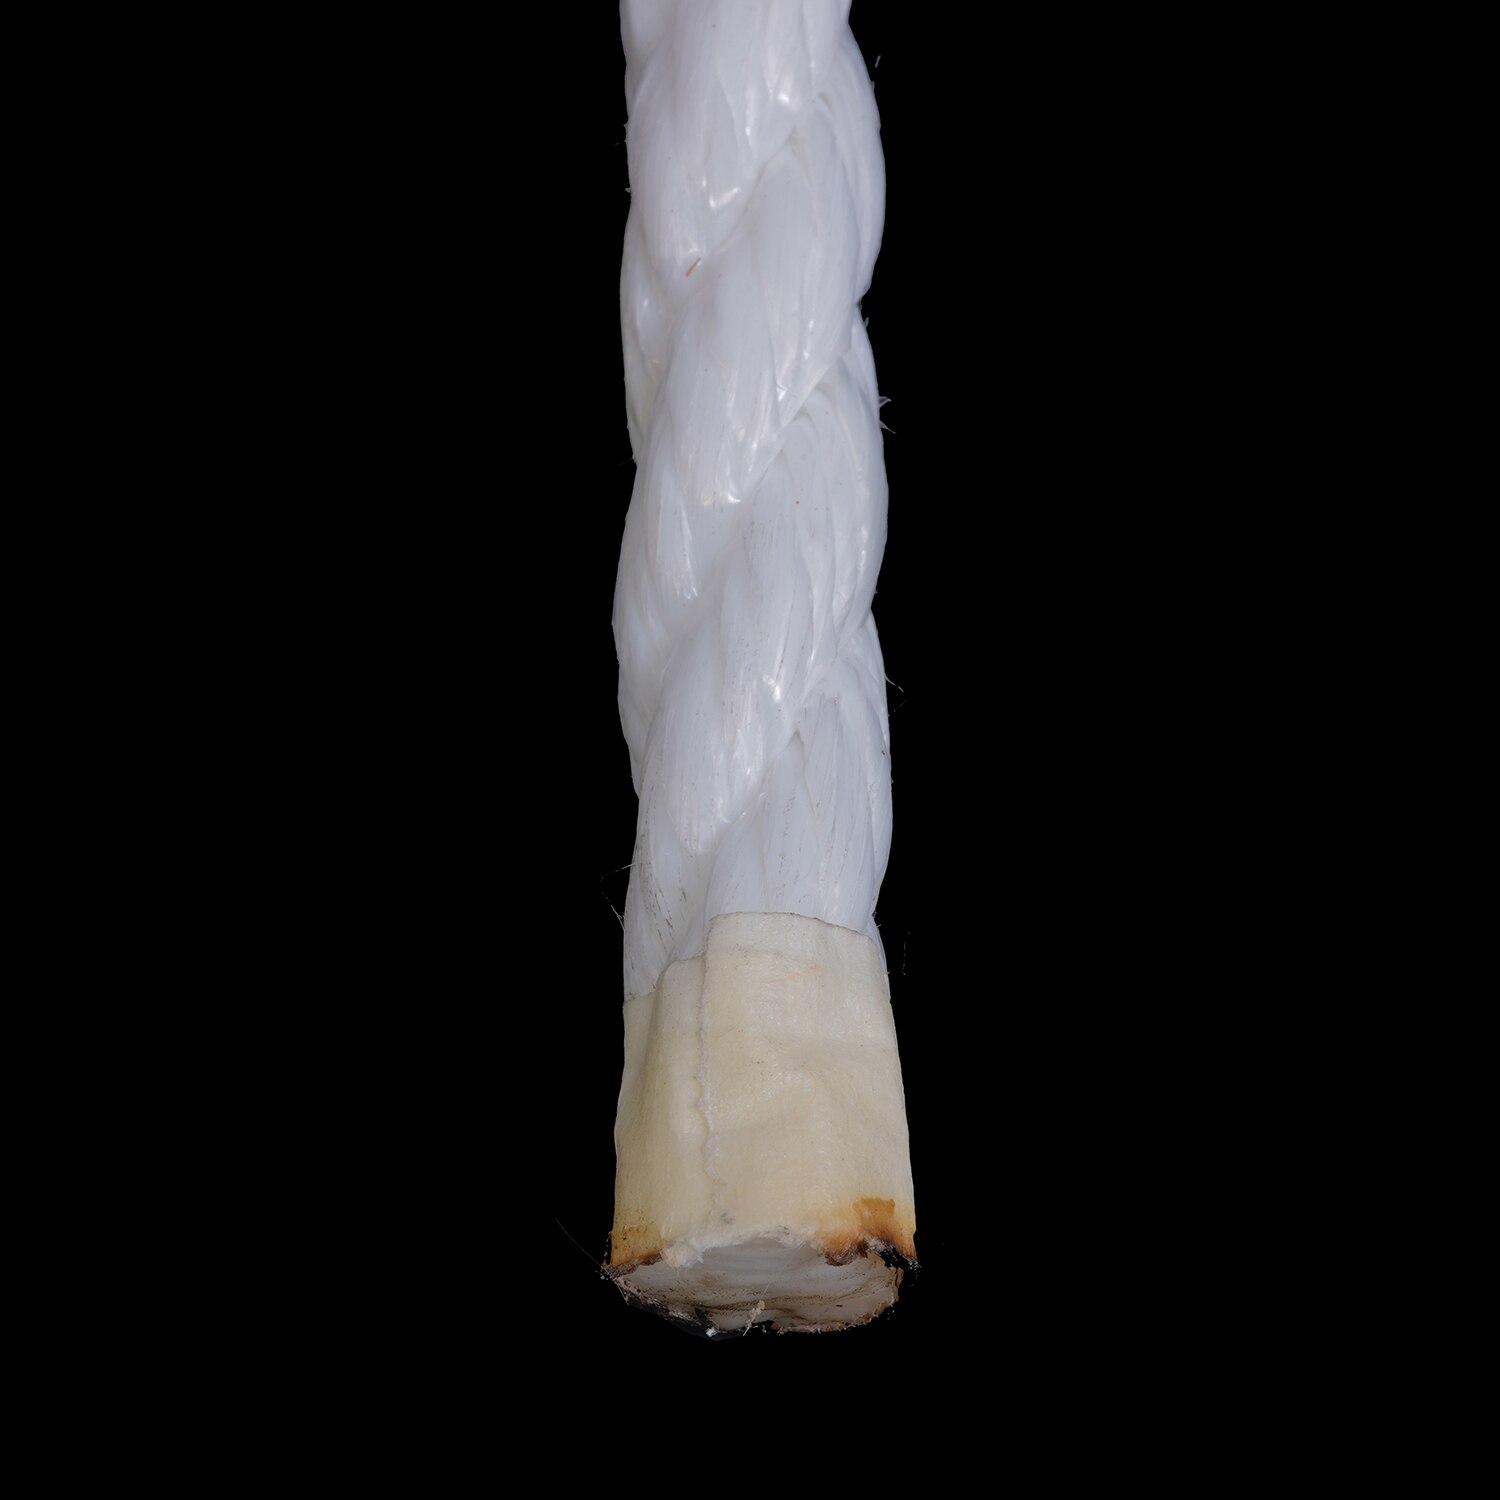 3-Strand Polypropylene Rope 1/2 x 600' White